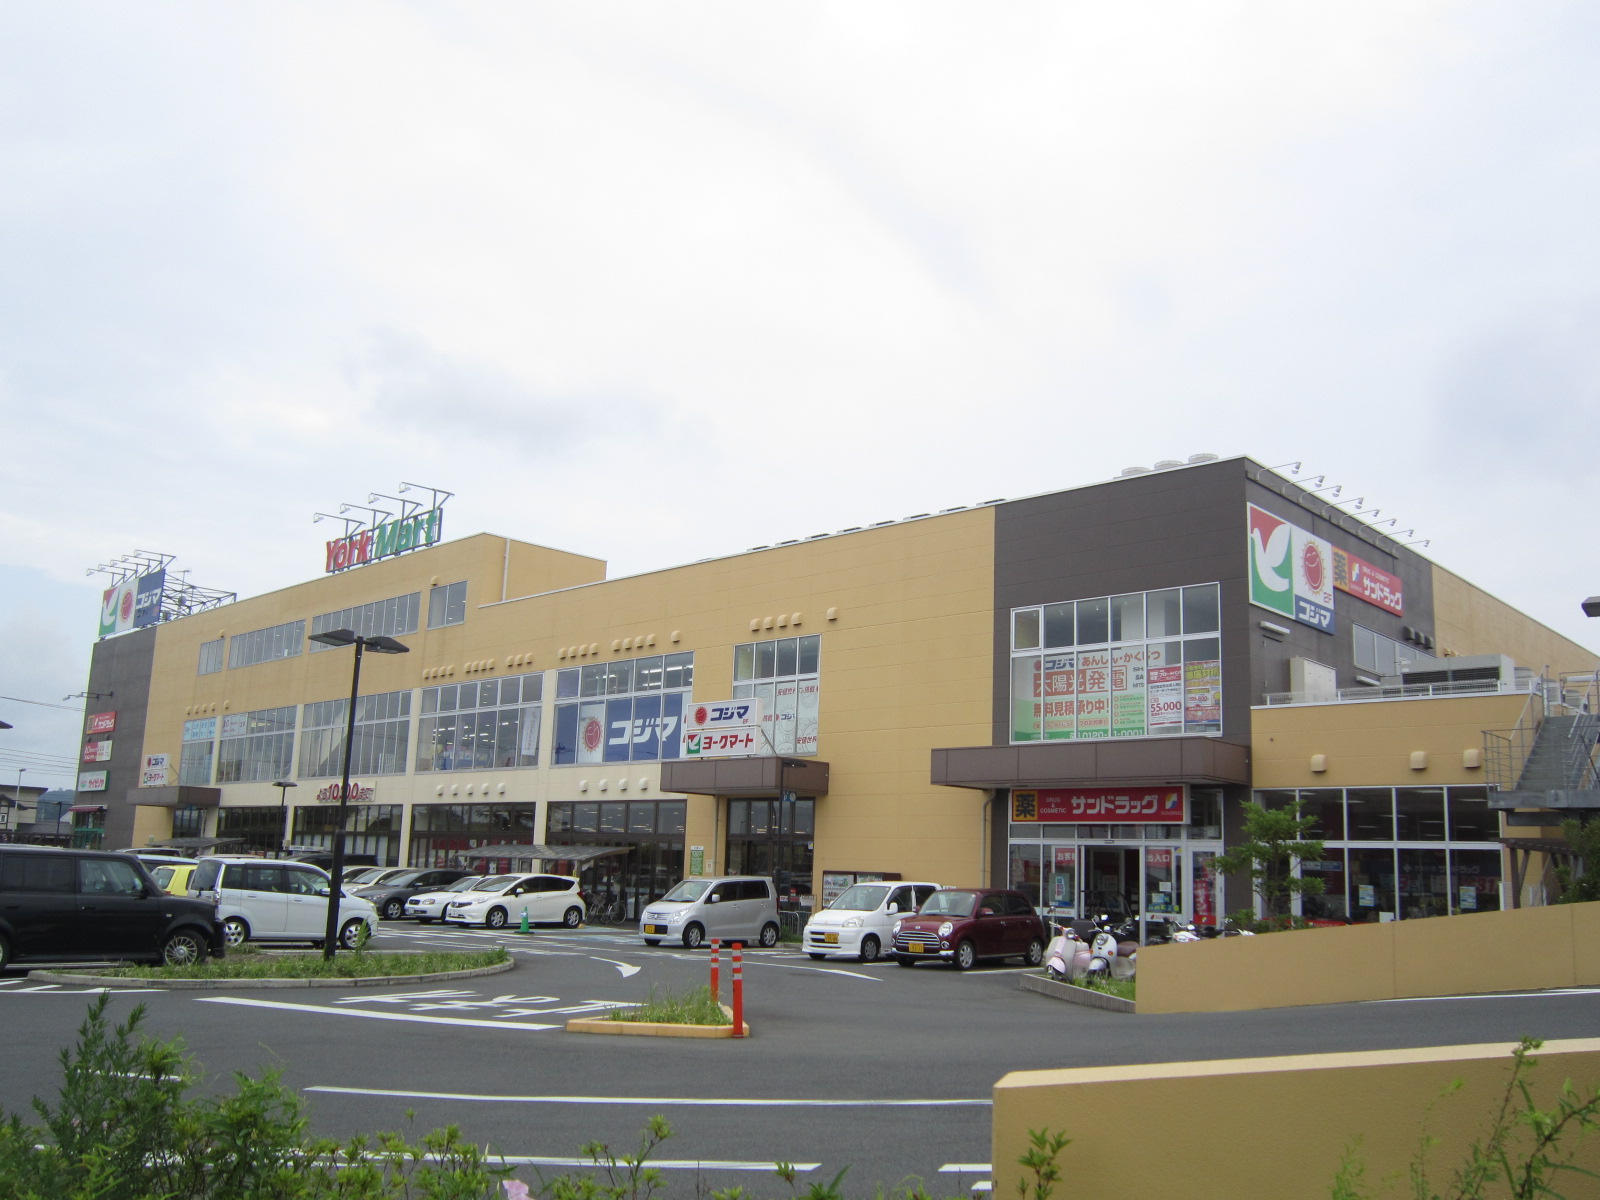 Shopping centre. 1740m to Yorktown Kitakaname (shopping center)